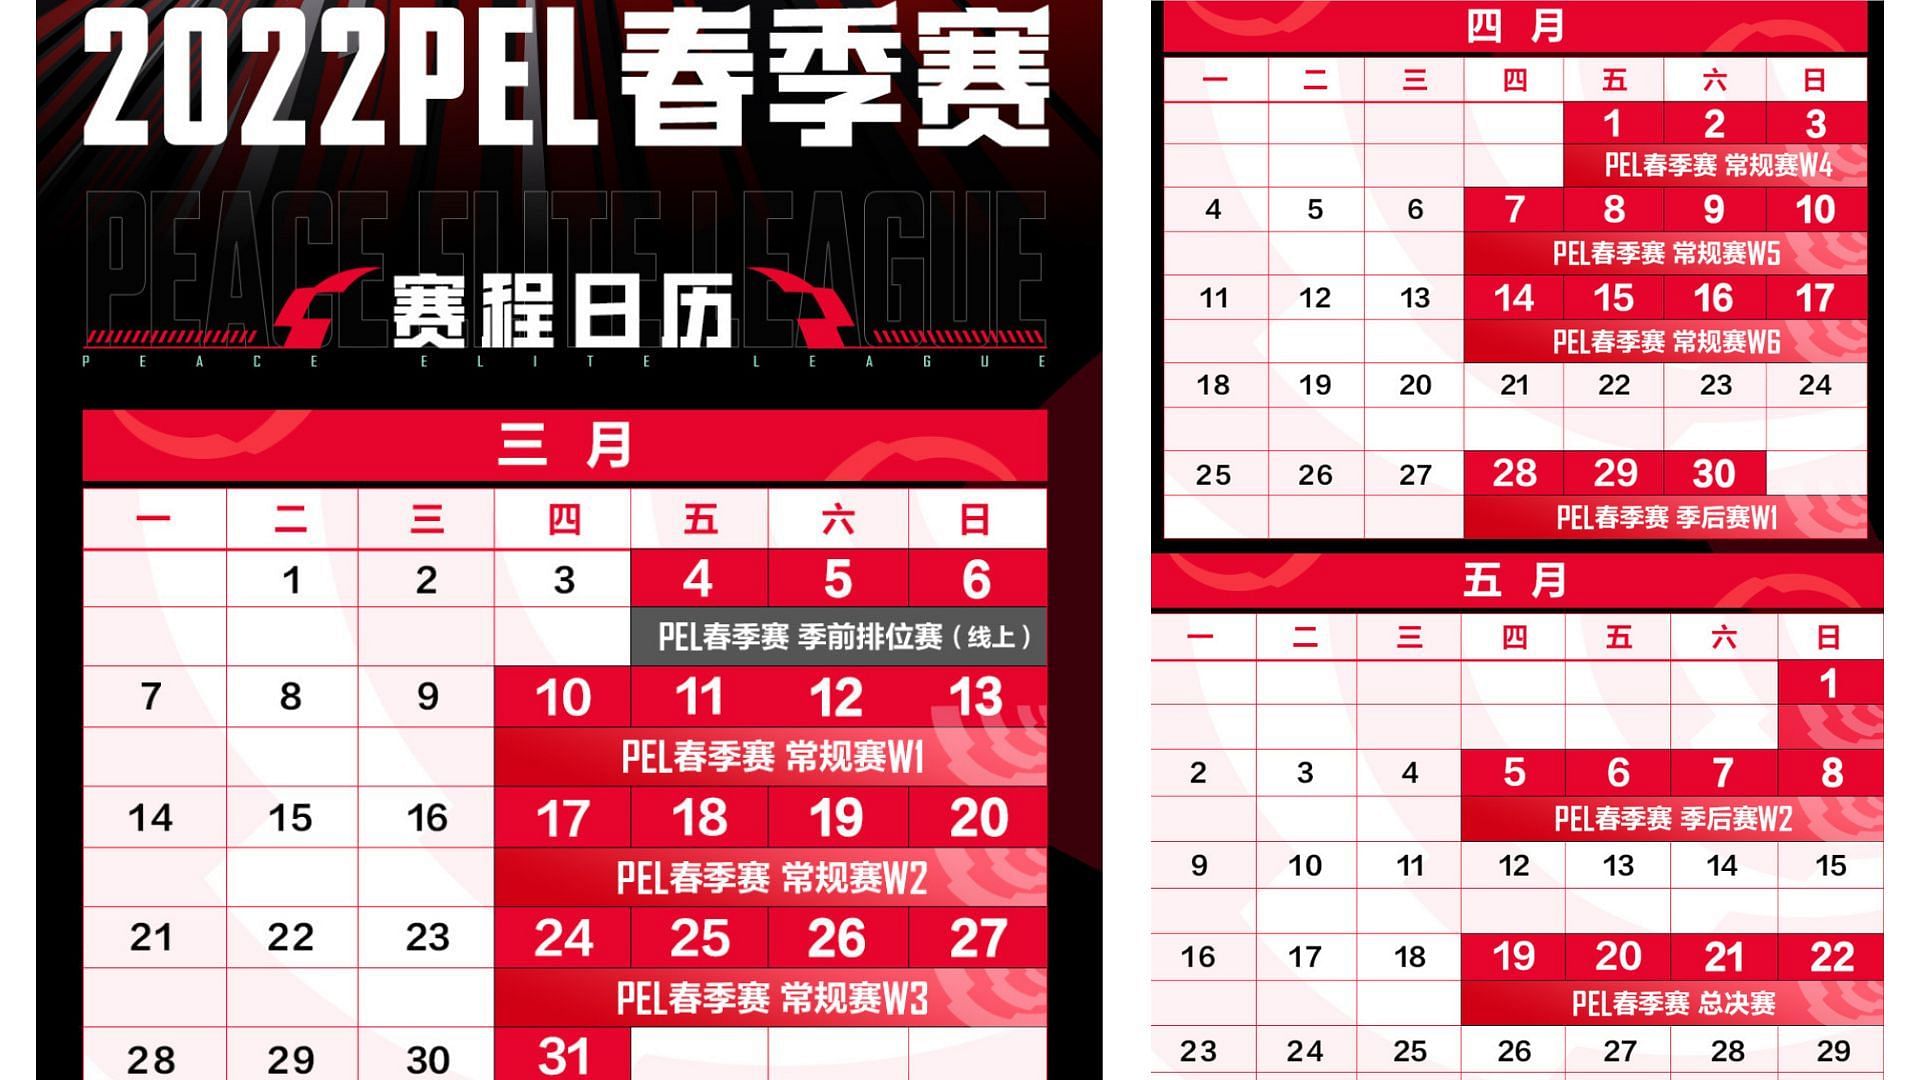 Schedule for PEL 2022 Spring Season (Image via Tencent)